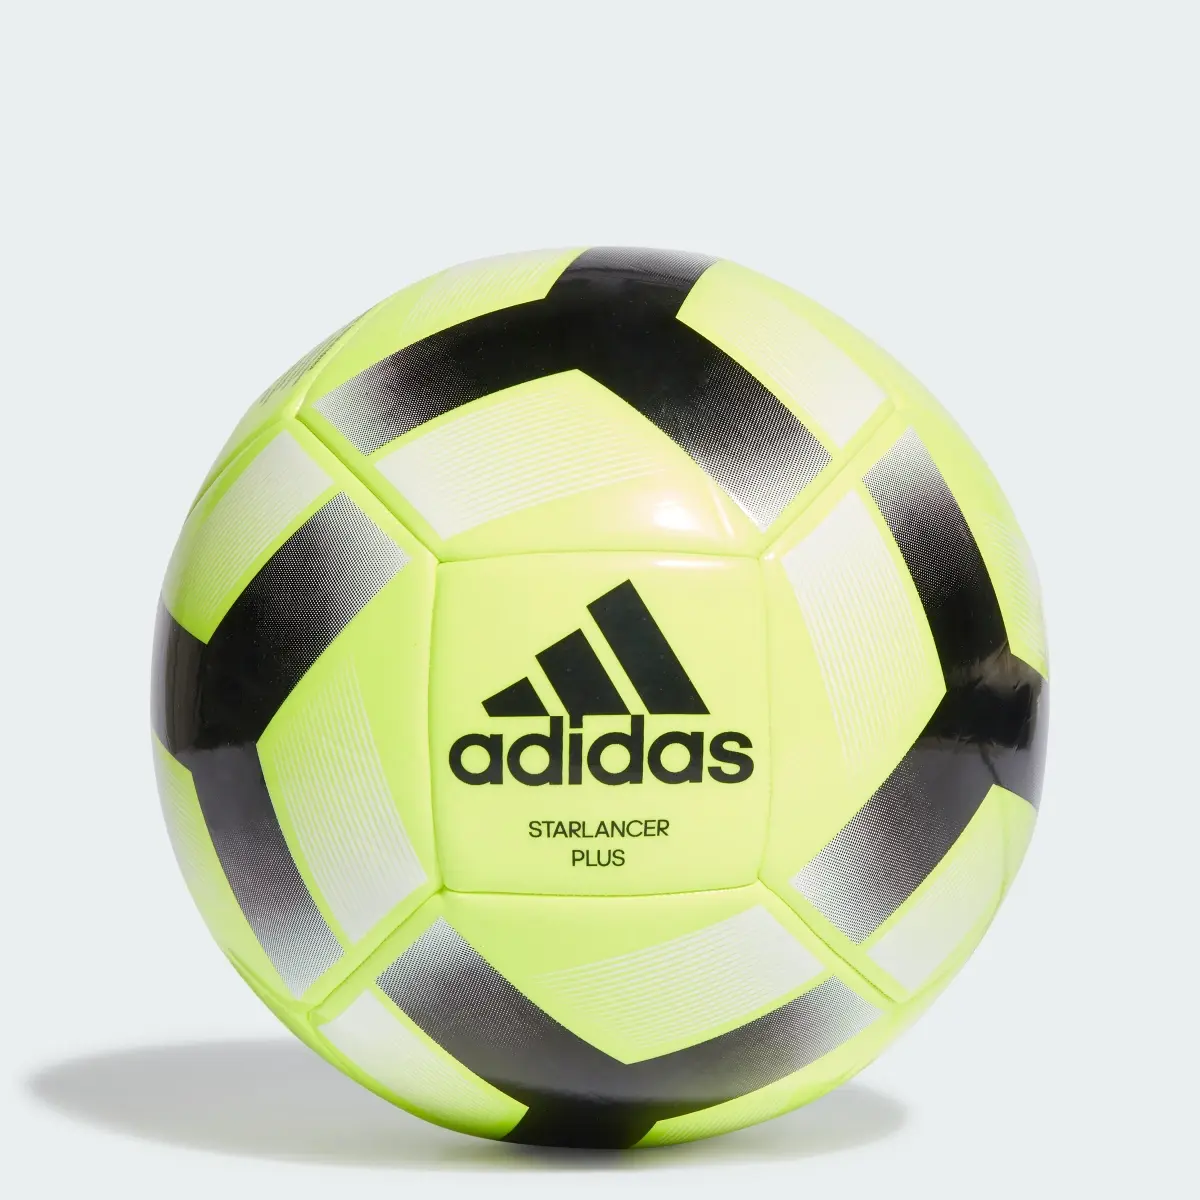 Adidas Starlancer Plus Football. 1